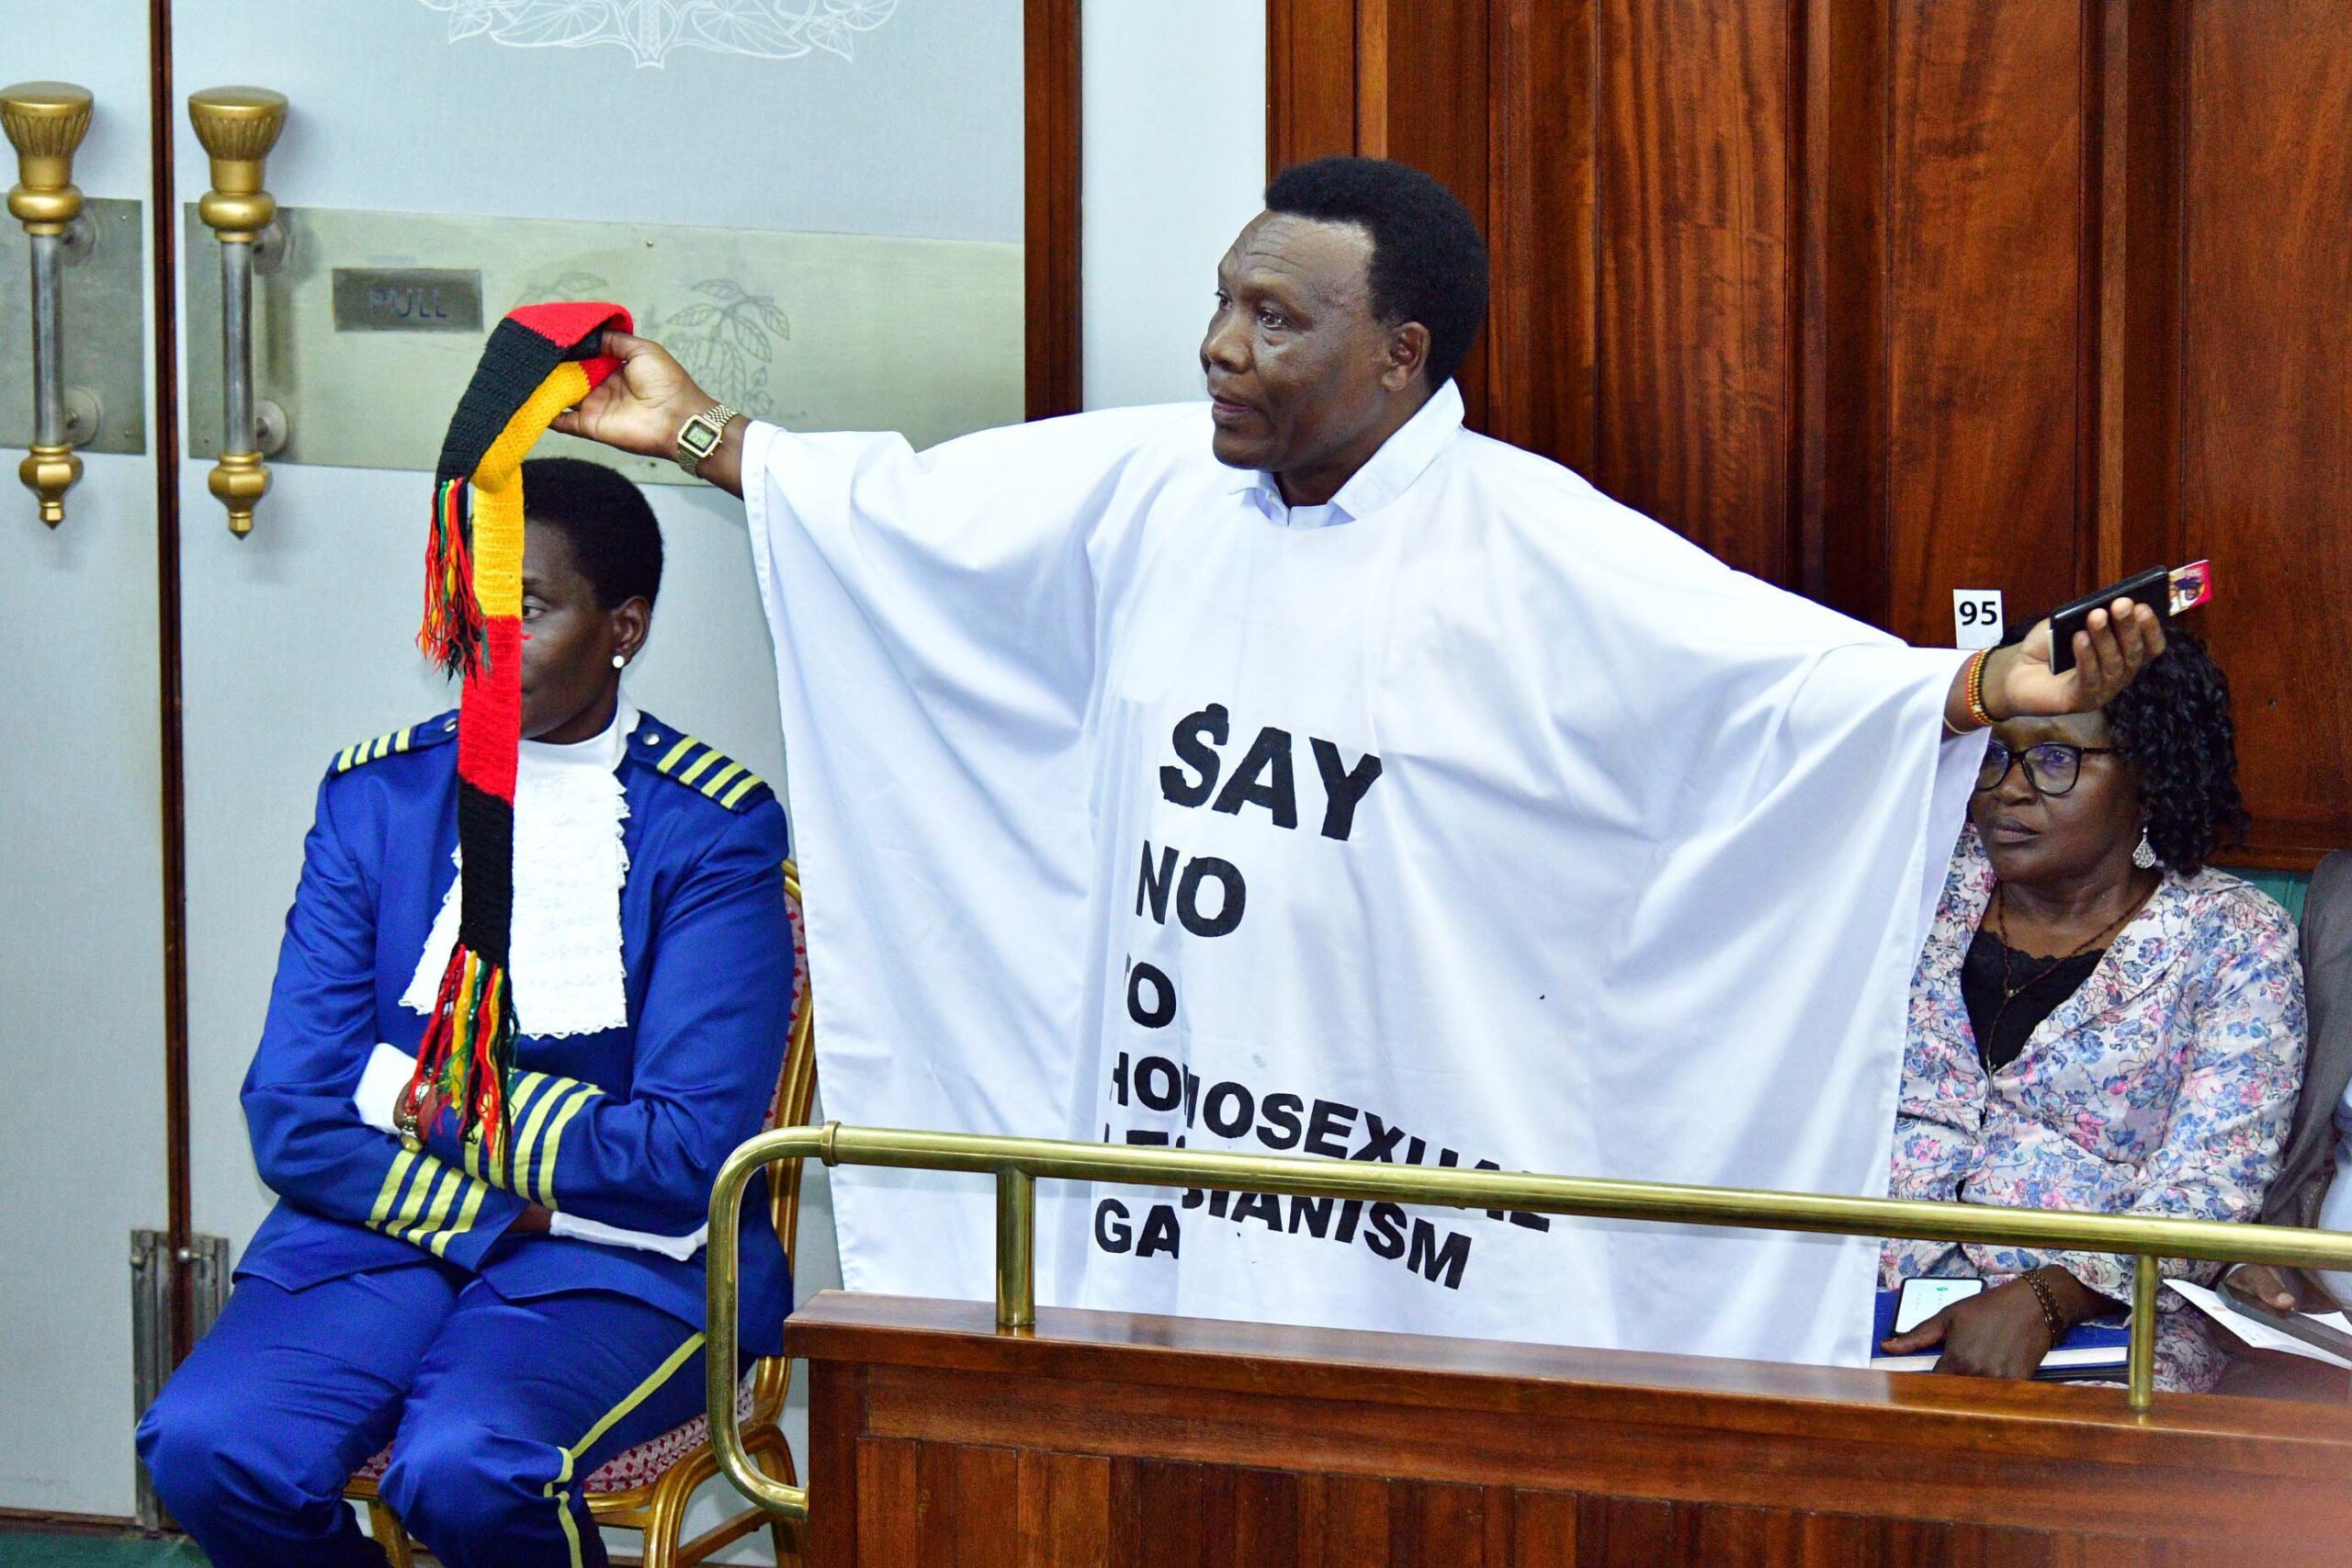 What awaits Uganda if gay law is enacted